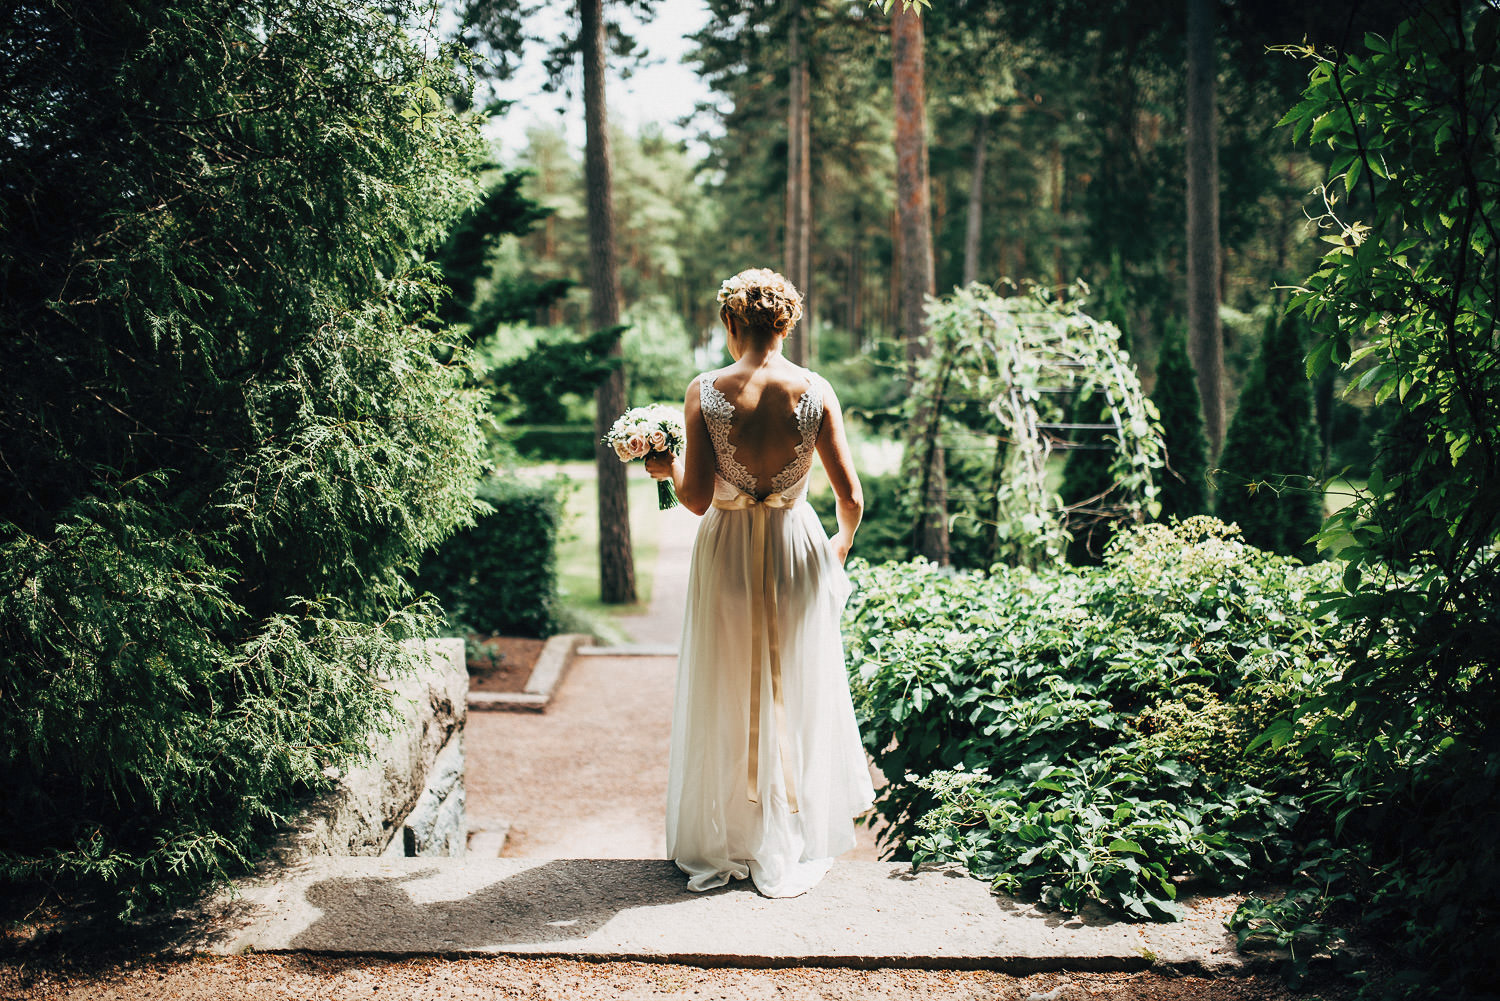 jere-satamo_valokuvaaja-turku_destination-wedding-photographer-finland-014.jpg